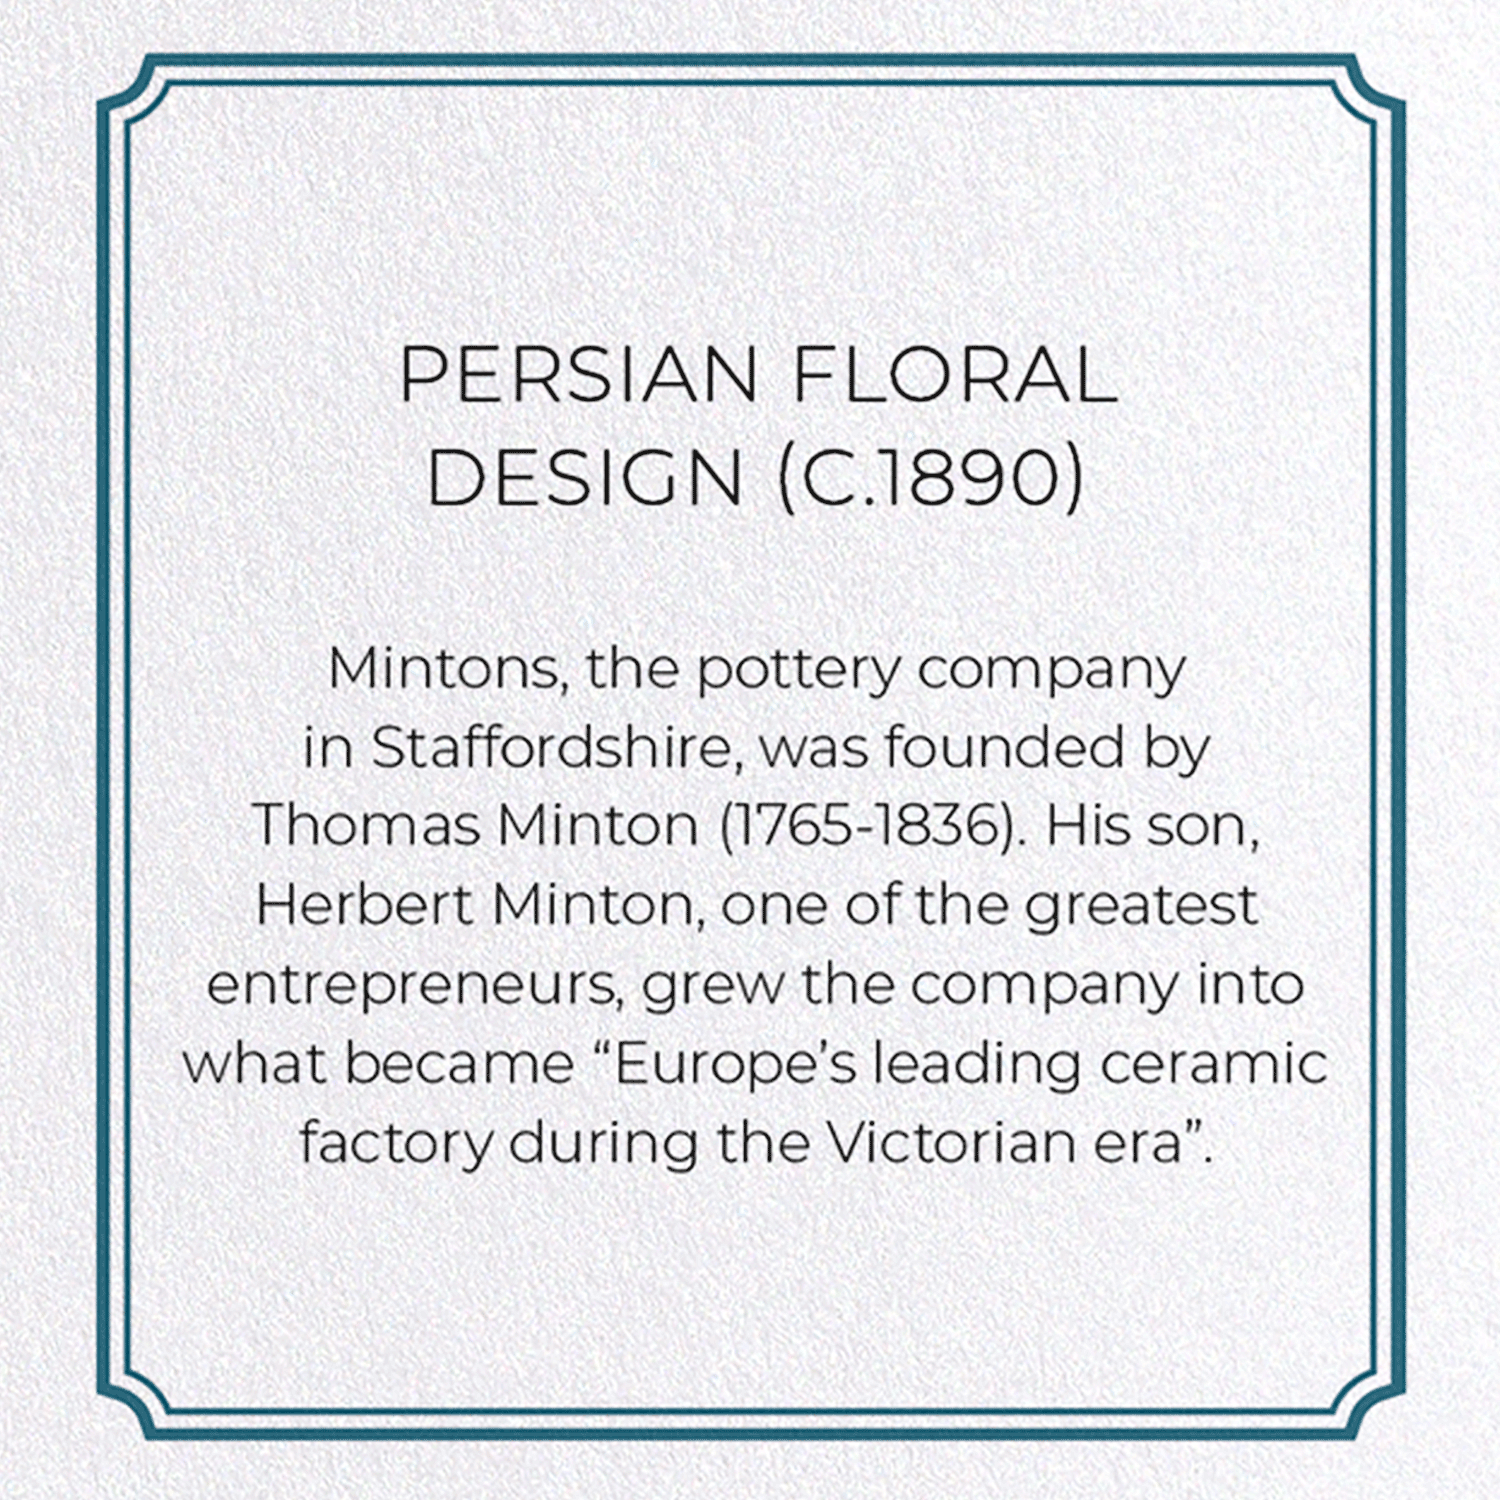 PERSIAN FLORAL DESIGN (C.1890)